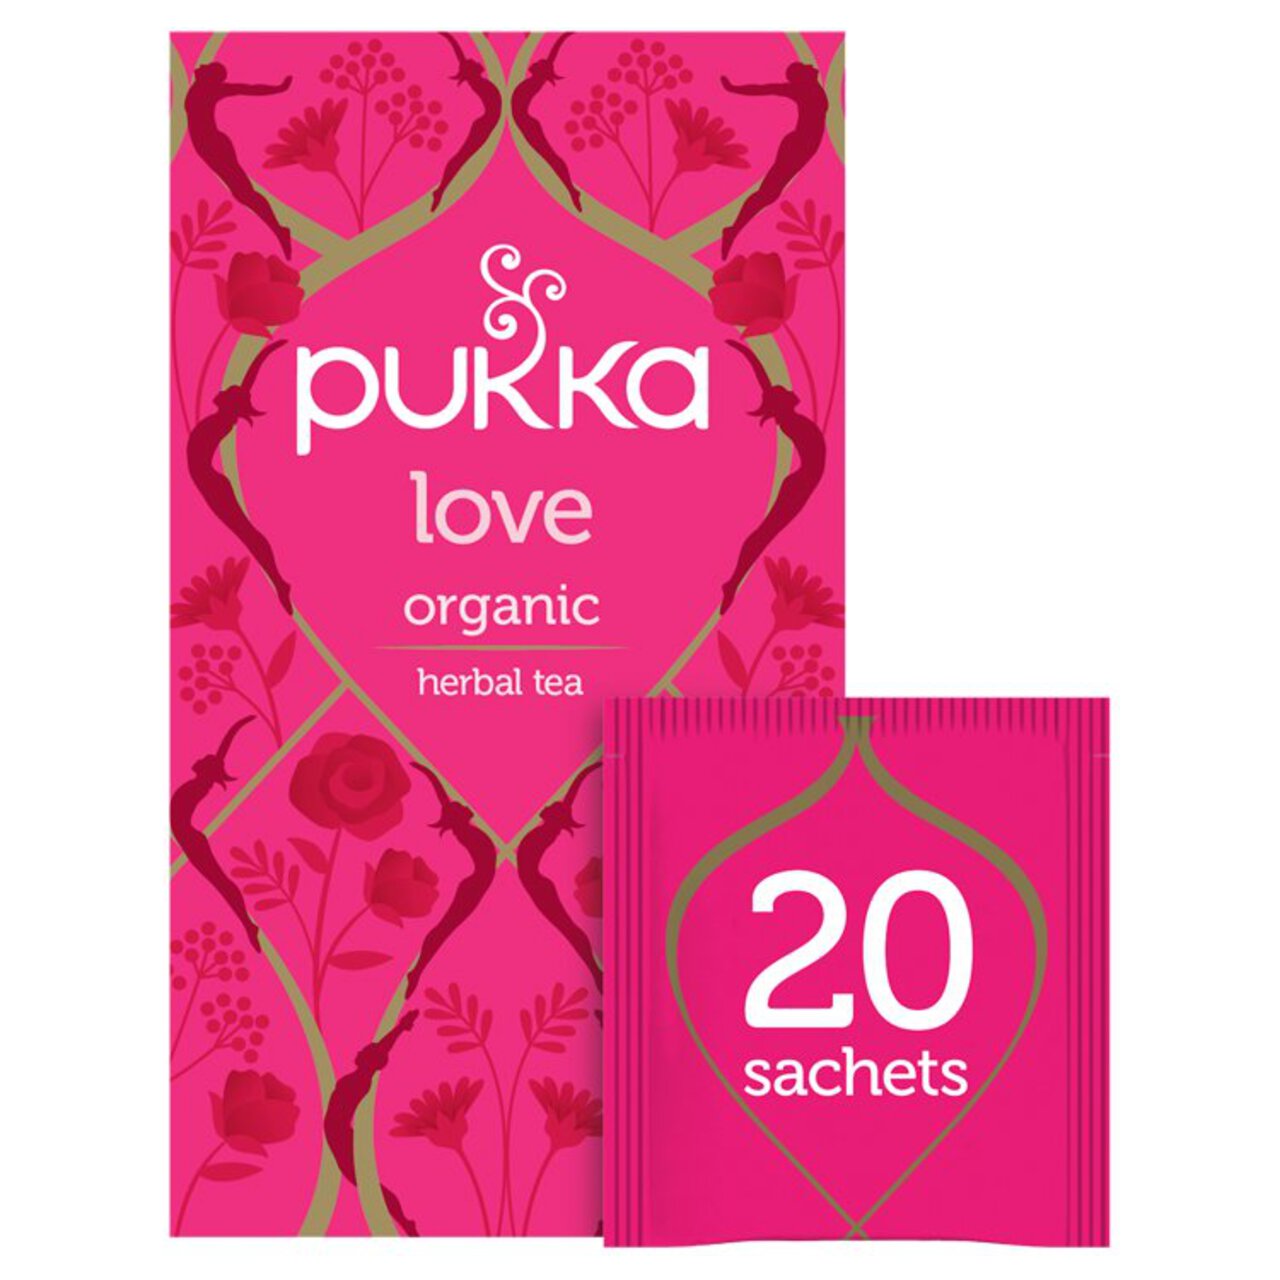 Pukka Tea Organic Love Tea Bags 20 per pack